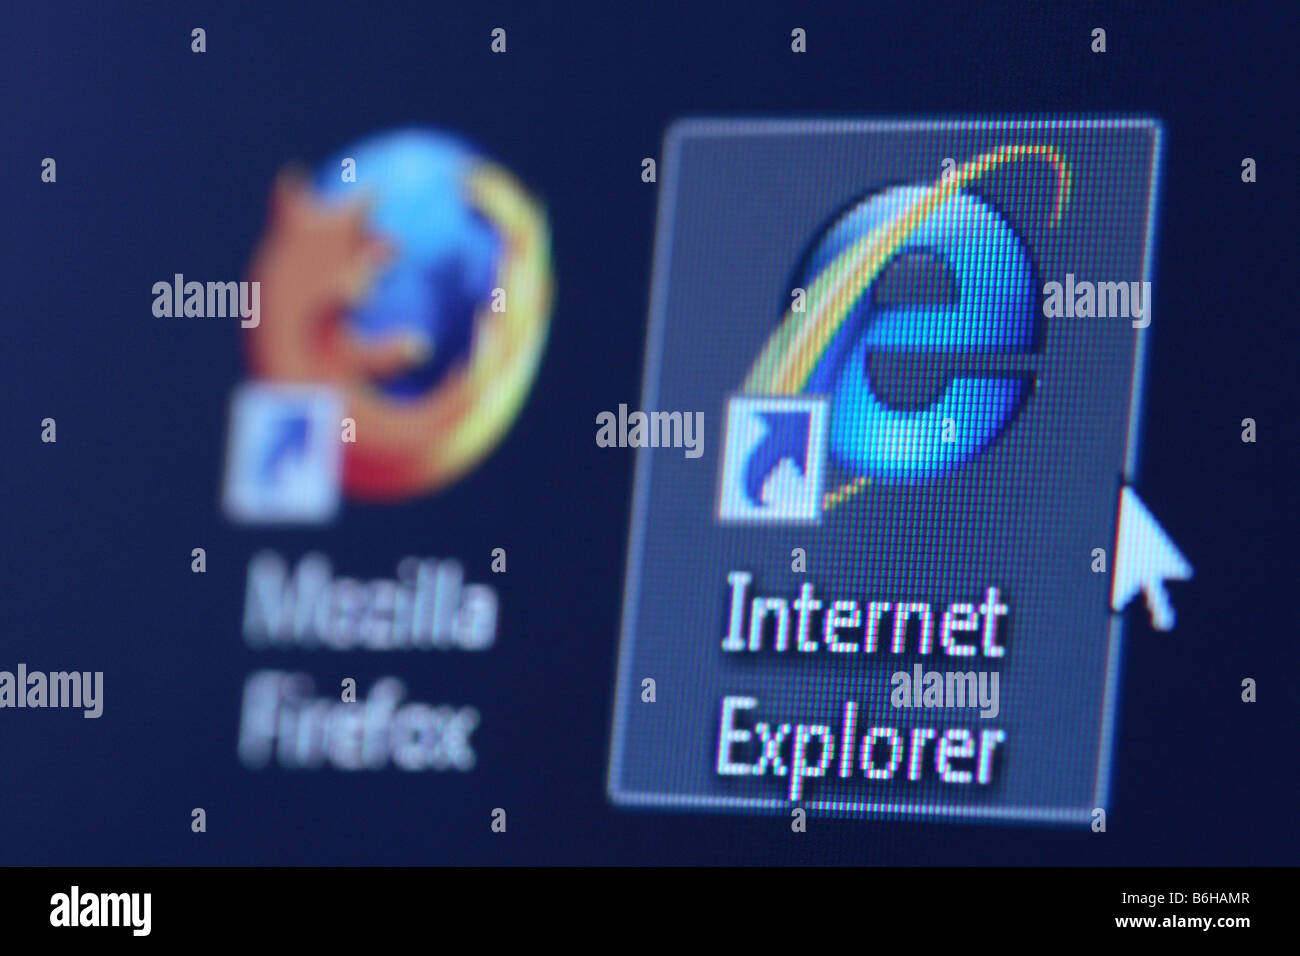 Microsoft Internet Explorer IE web browser software icon alongisde the rival Mozilla Firefox web browser icon Stock Photo